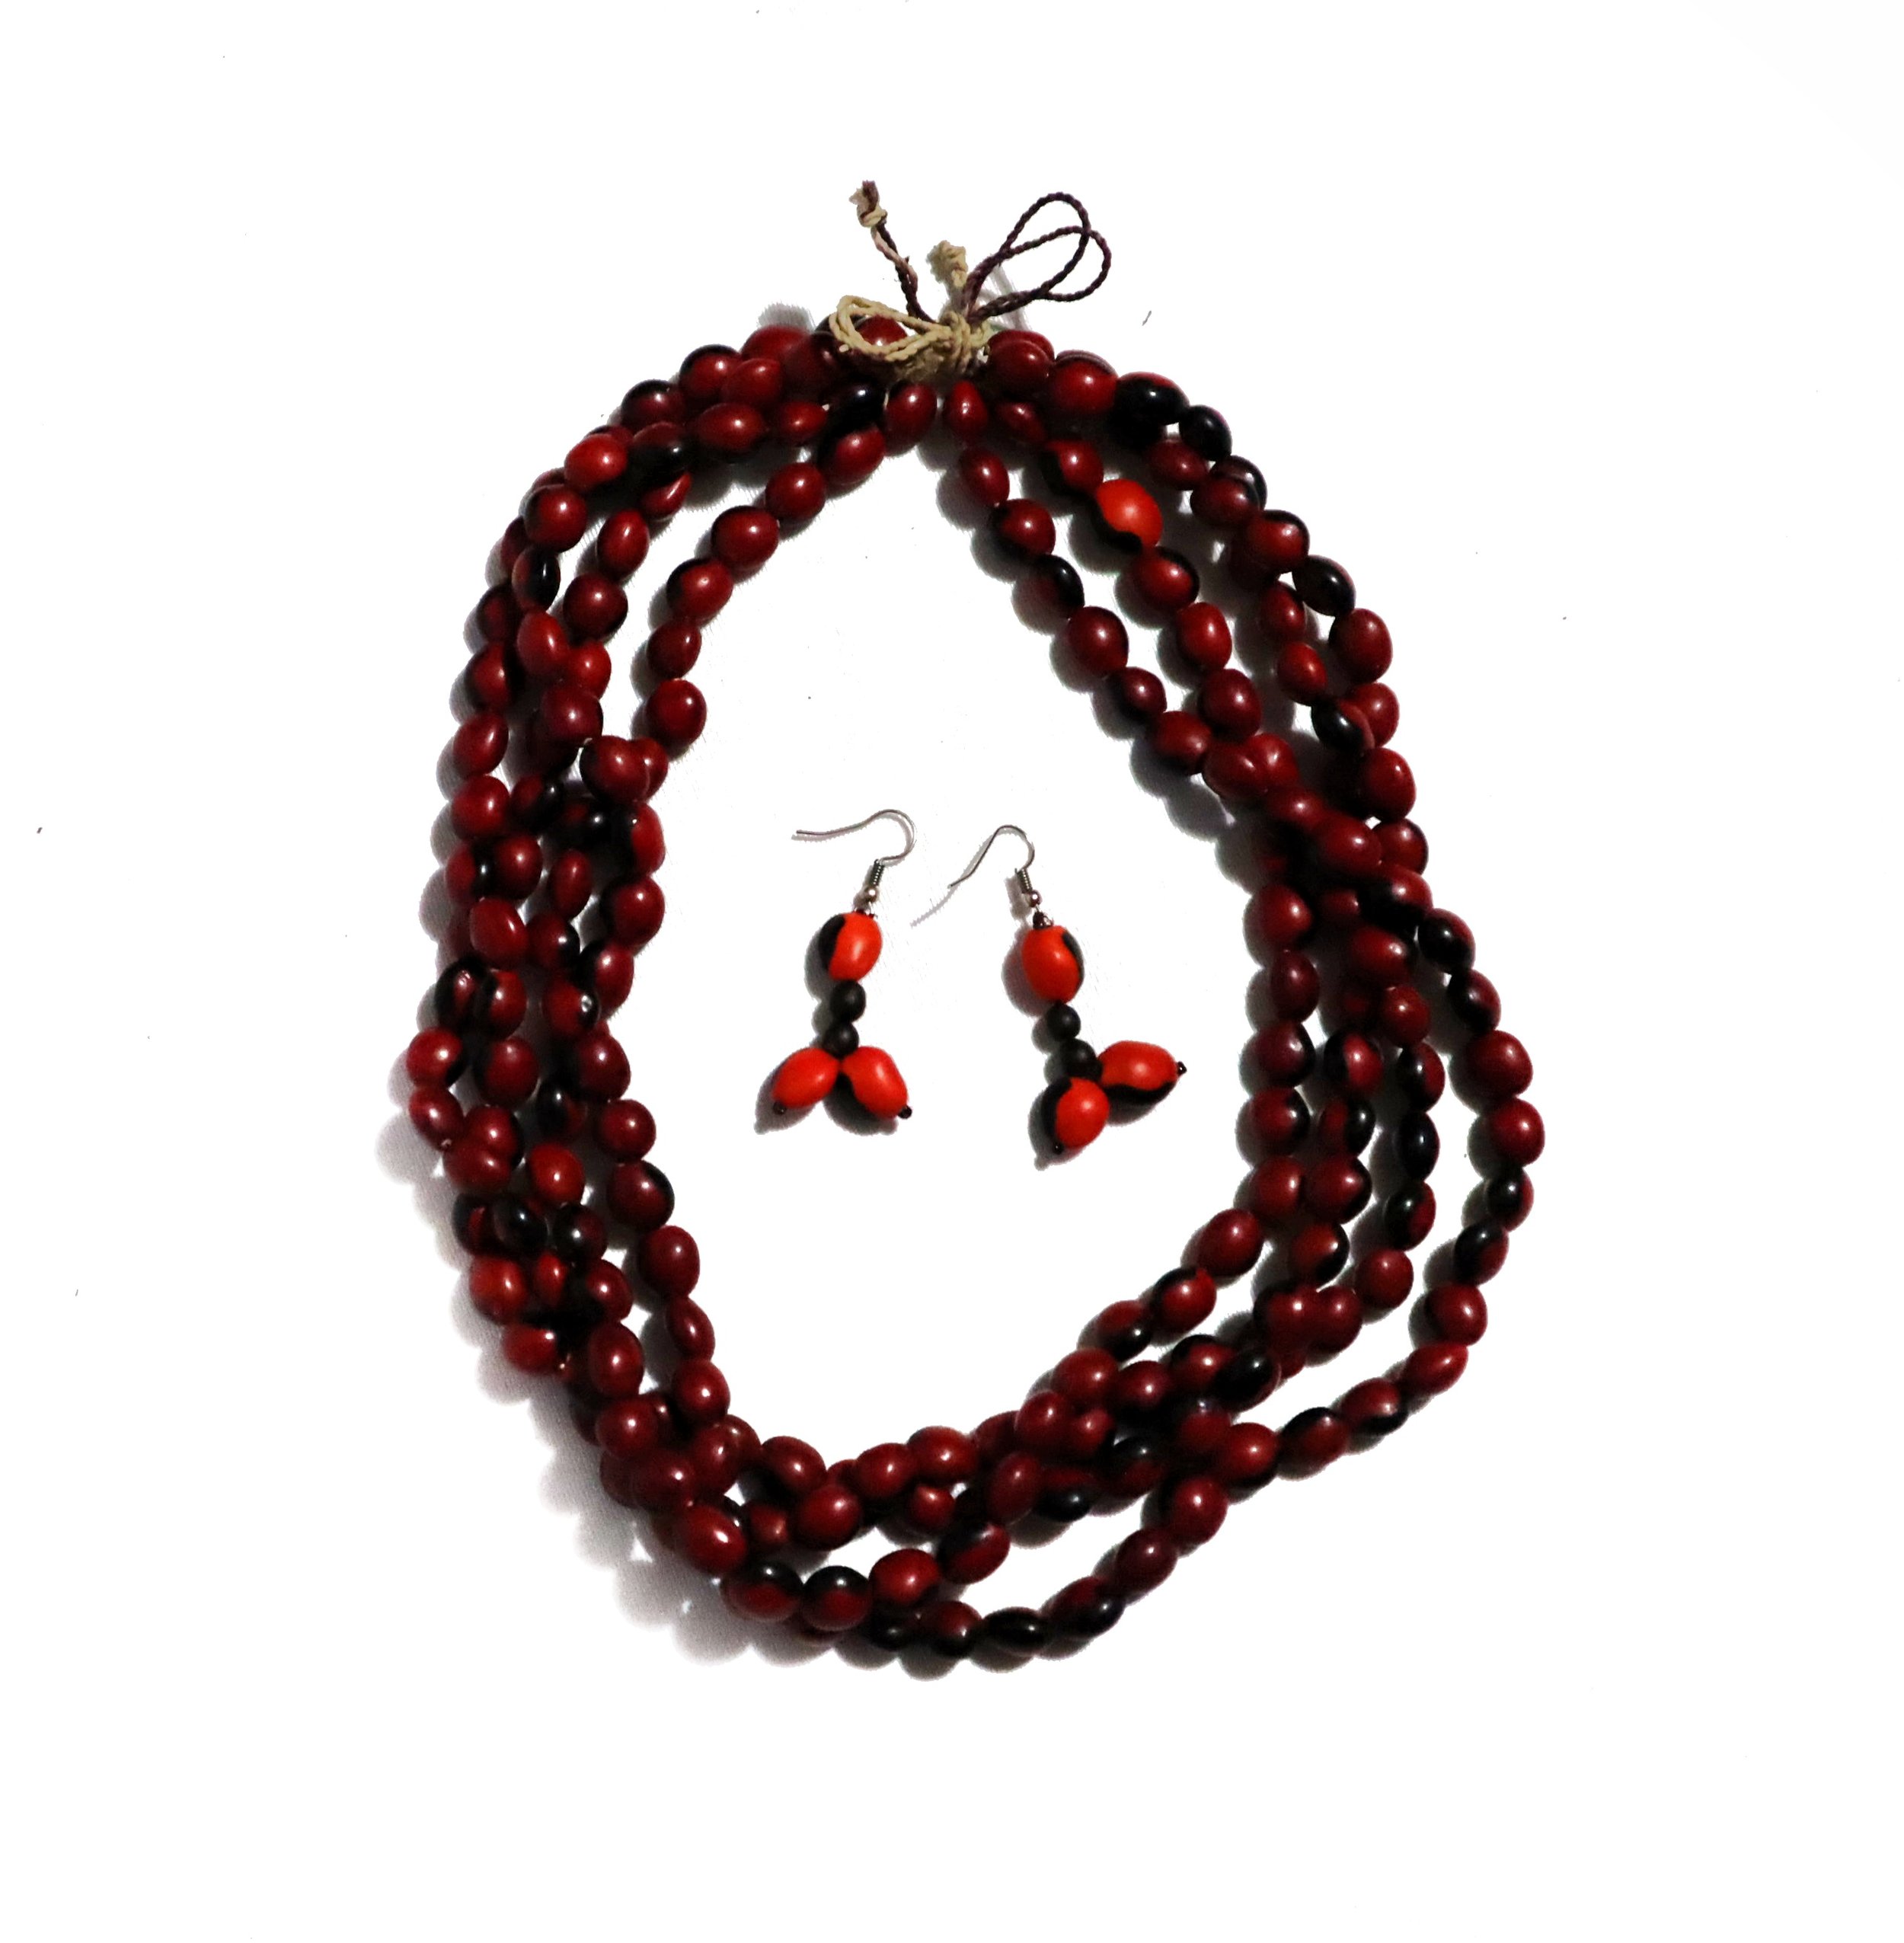 Obatawe- Necklace with Earrings.jpeg